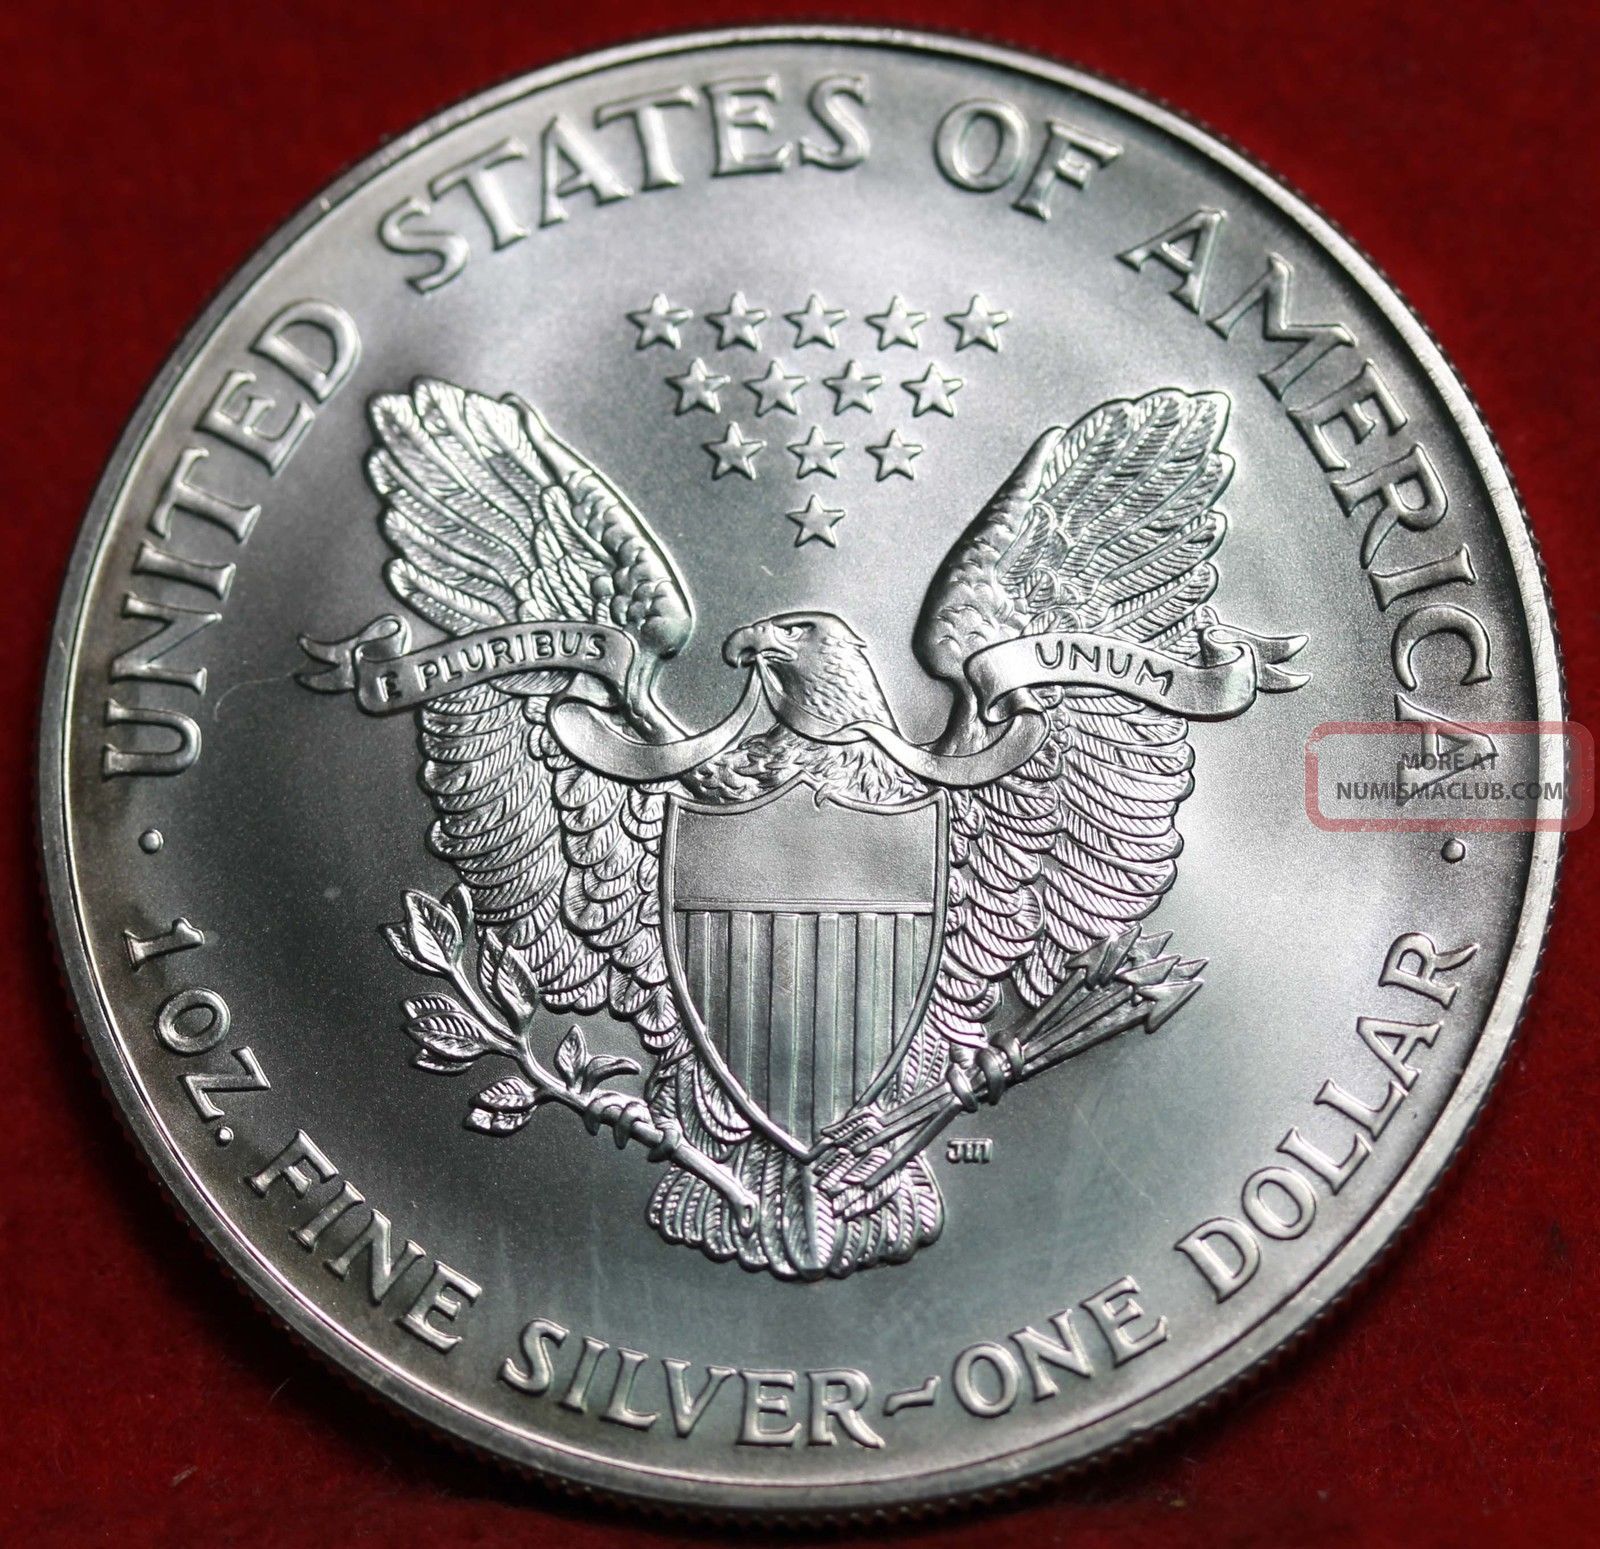 Uncirculated 2002 American Eagle Silver Dollar